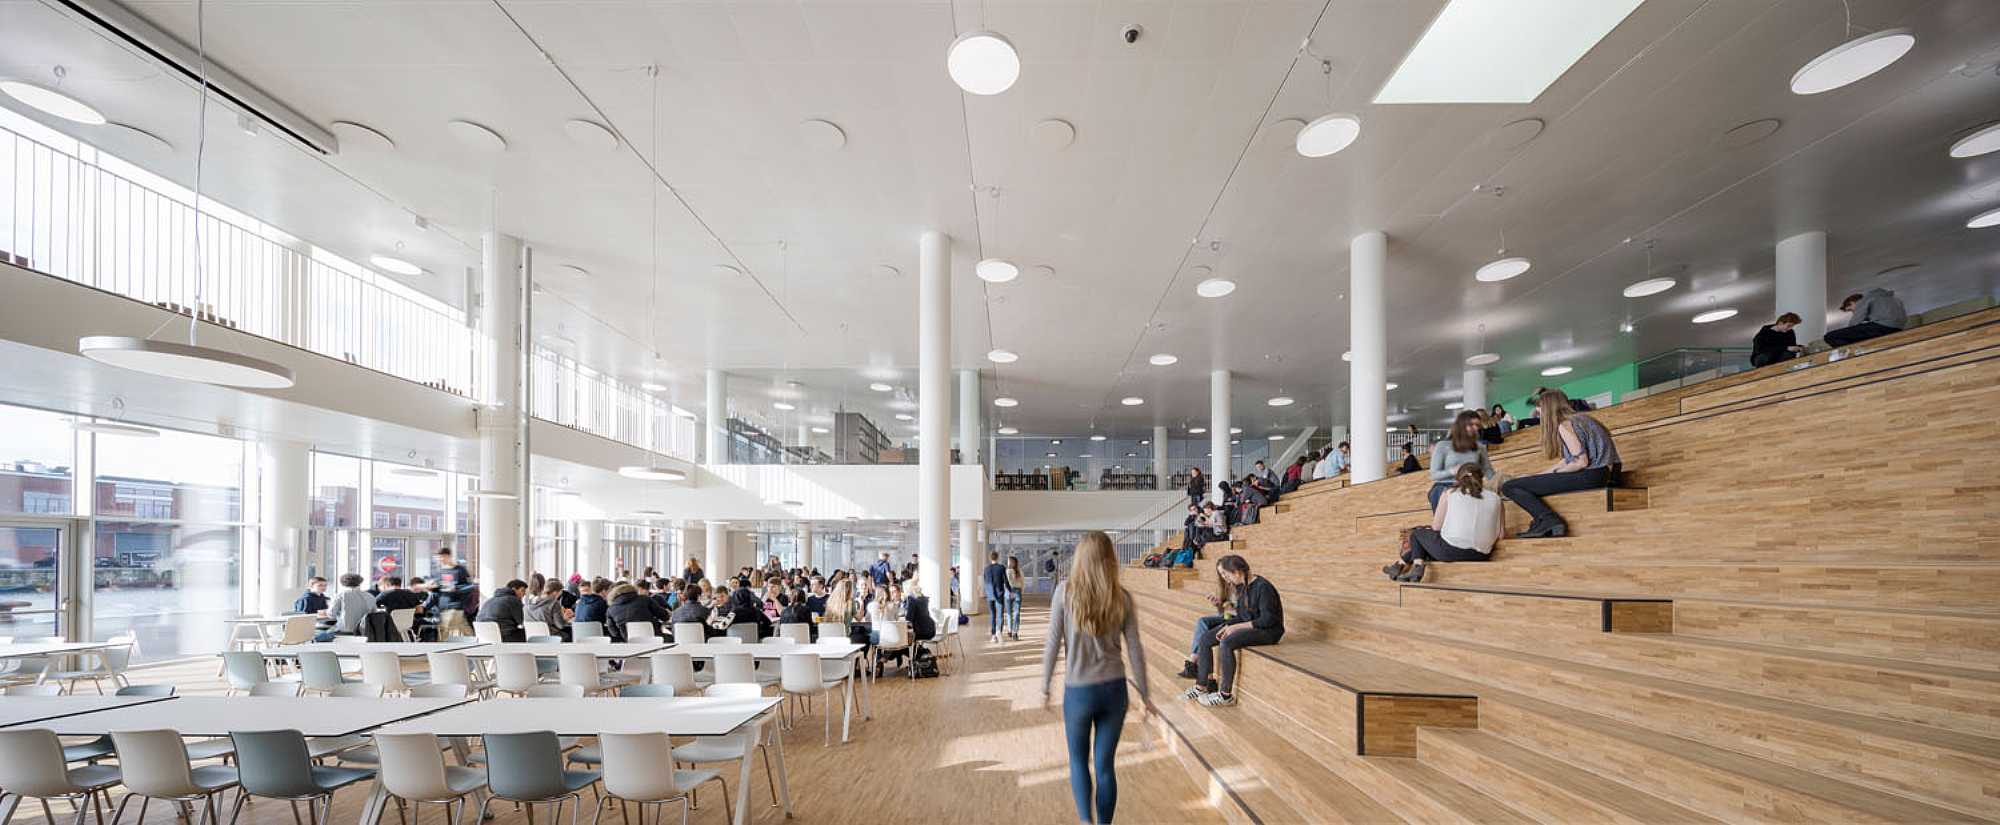 One of the common areas inside the Copenhagen International School Nordhavn